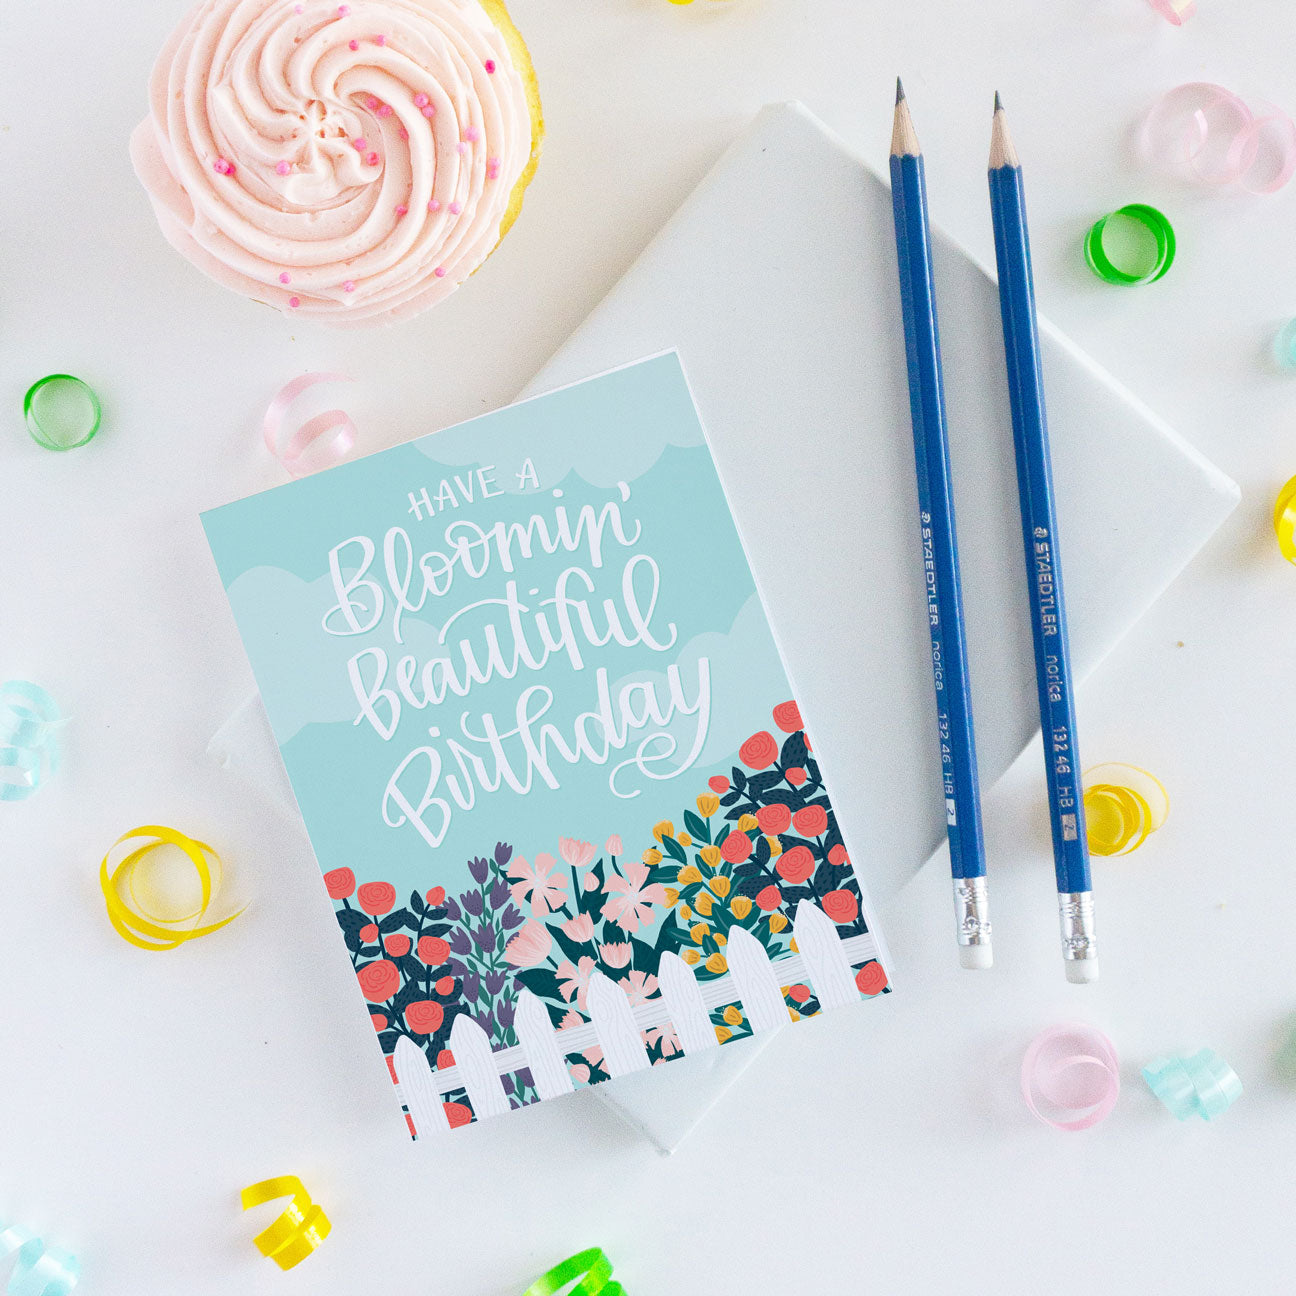 Have a Bloomin' Beautiful Birthday Gardening Birthday Card